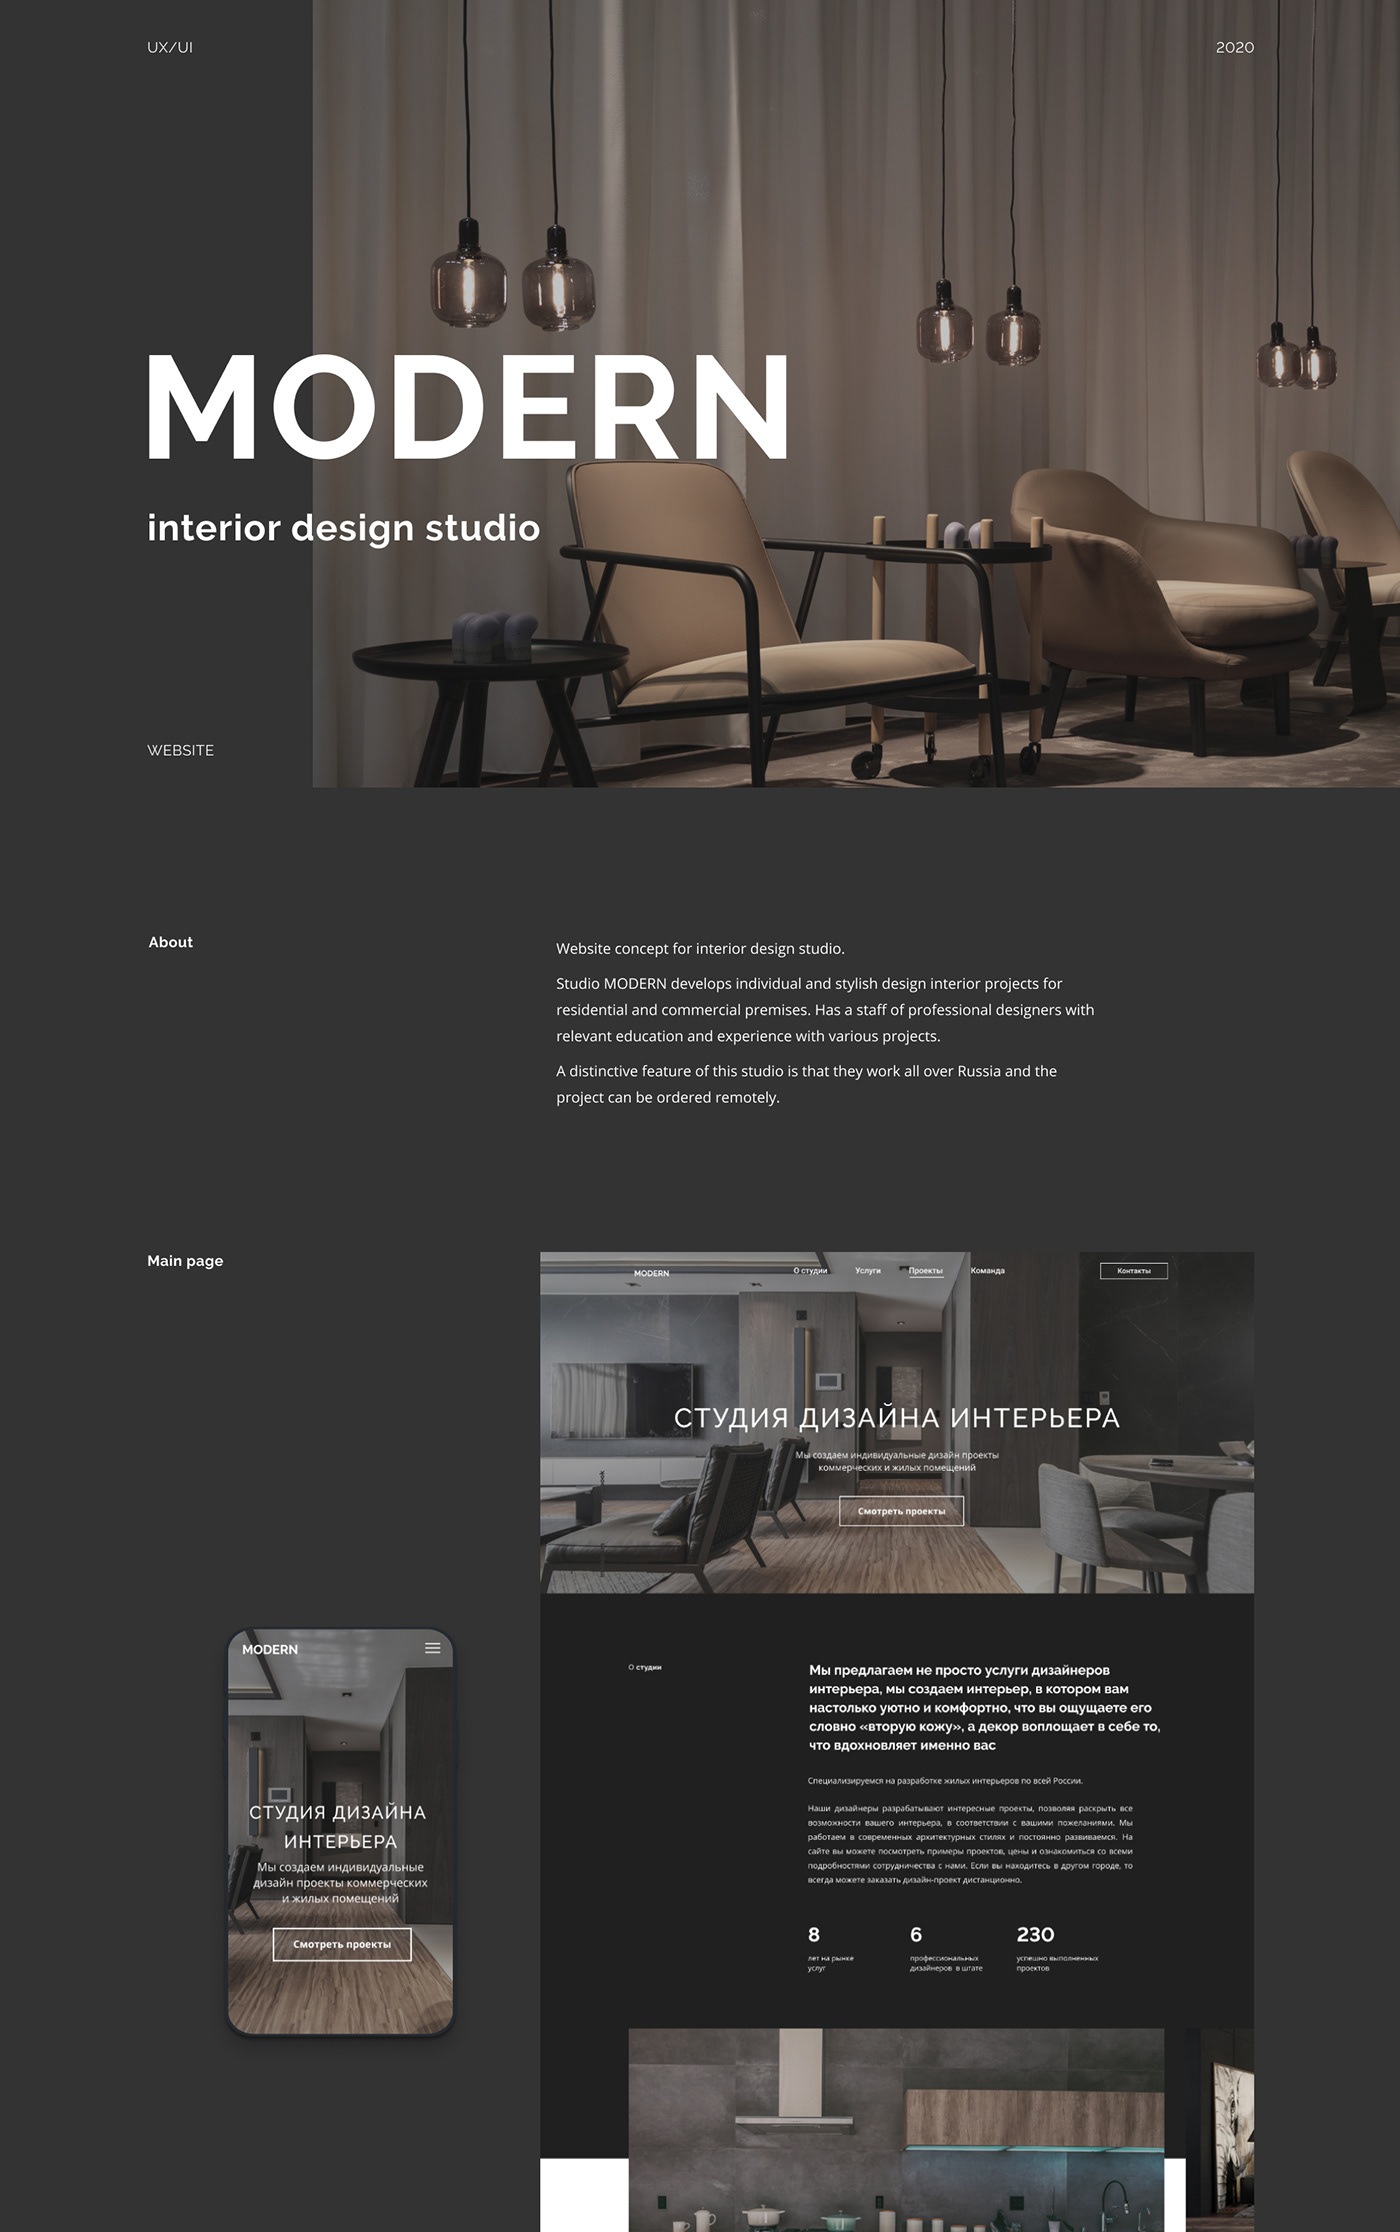 Website concept for interior design studio
